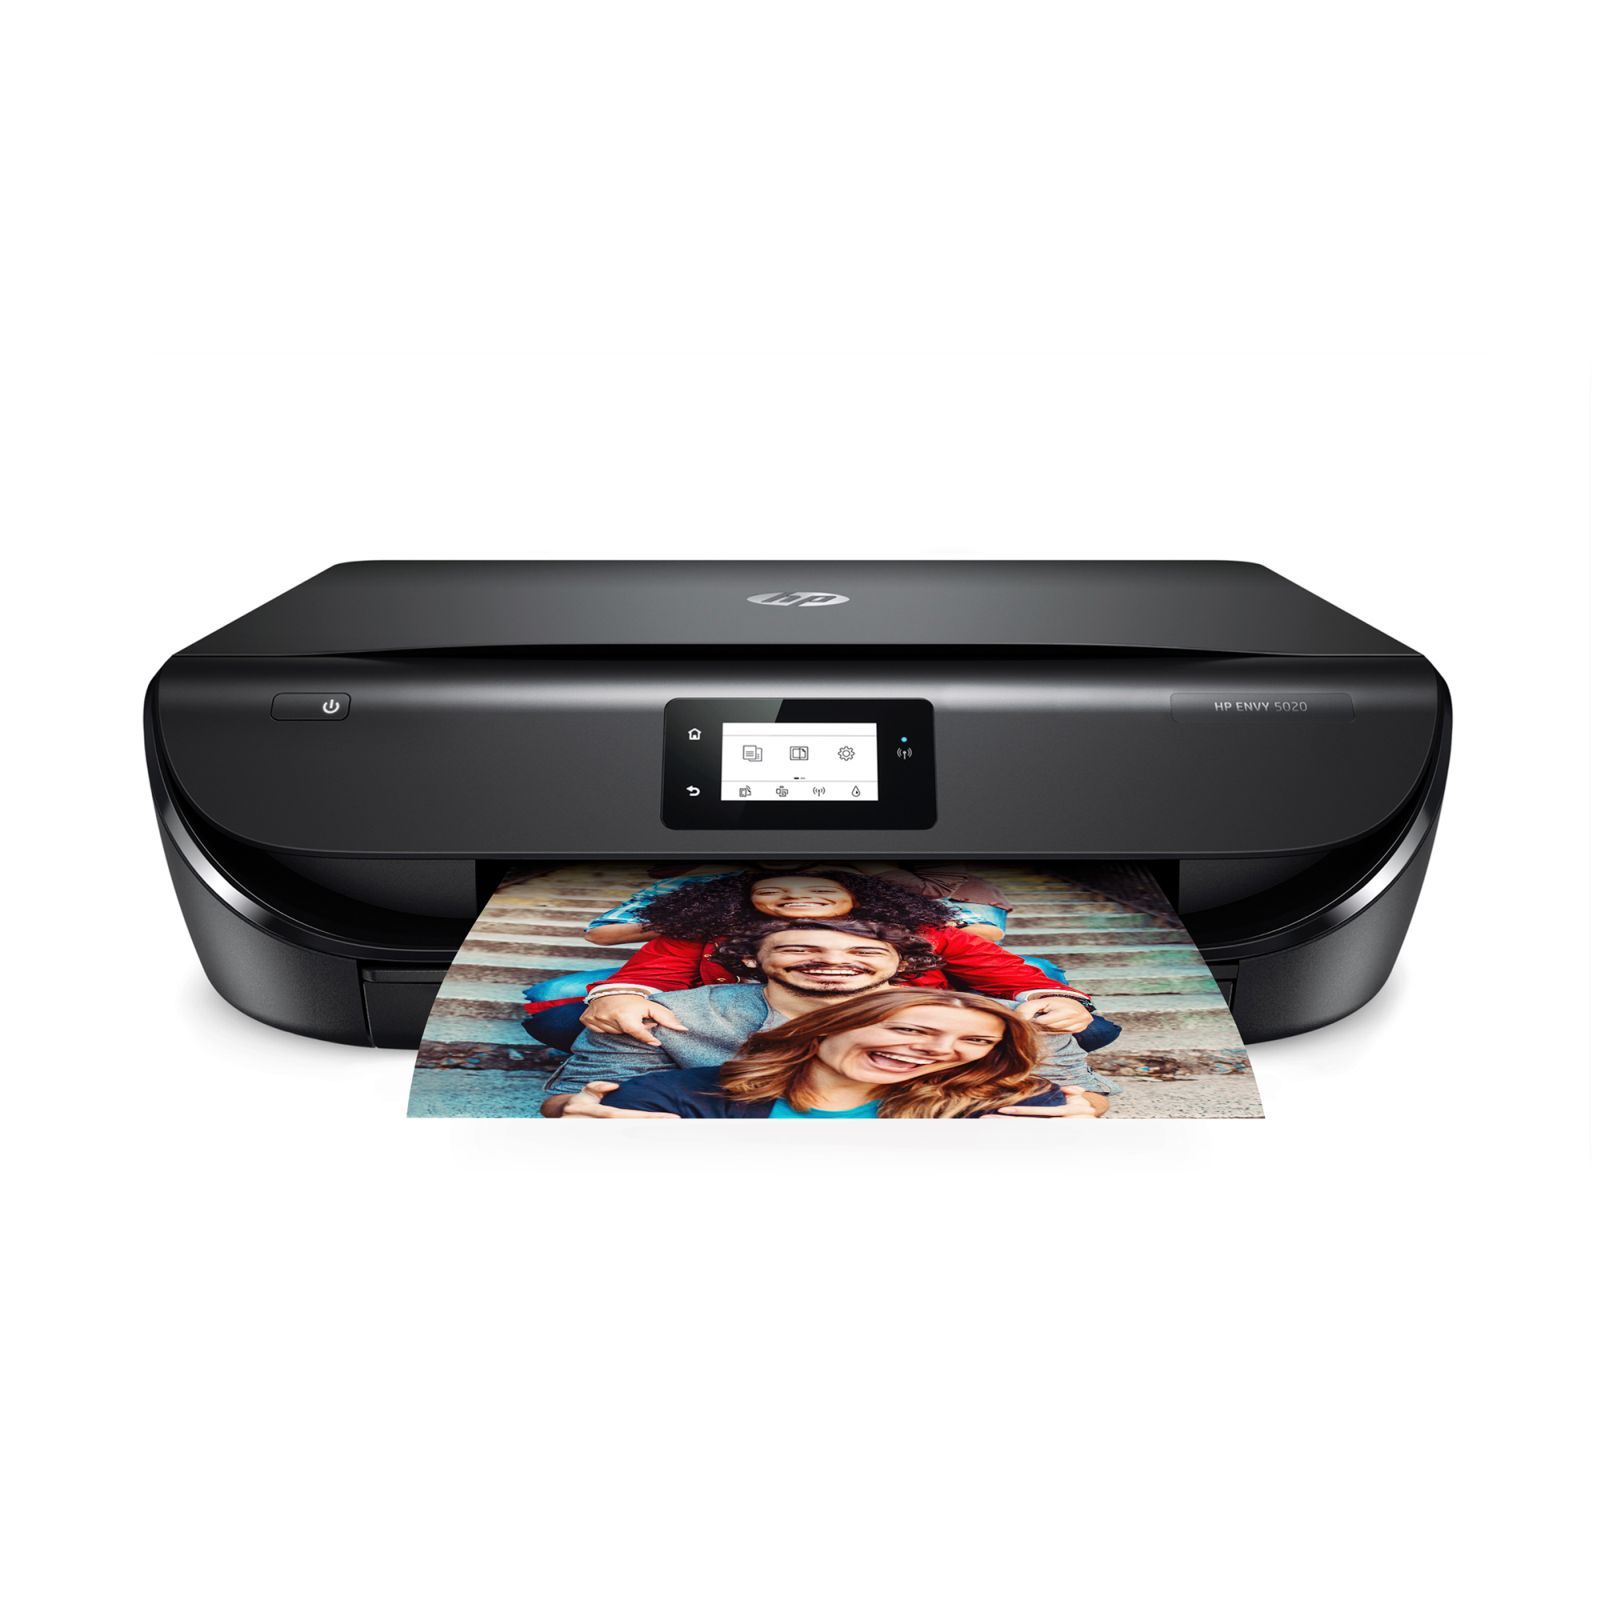 HP Envy 5020 Printer